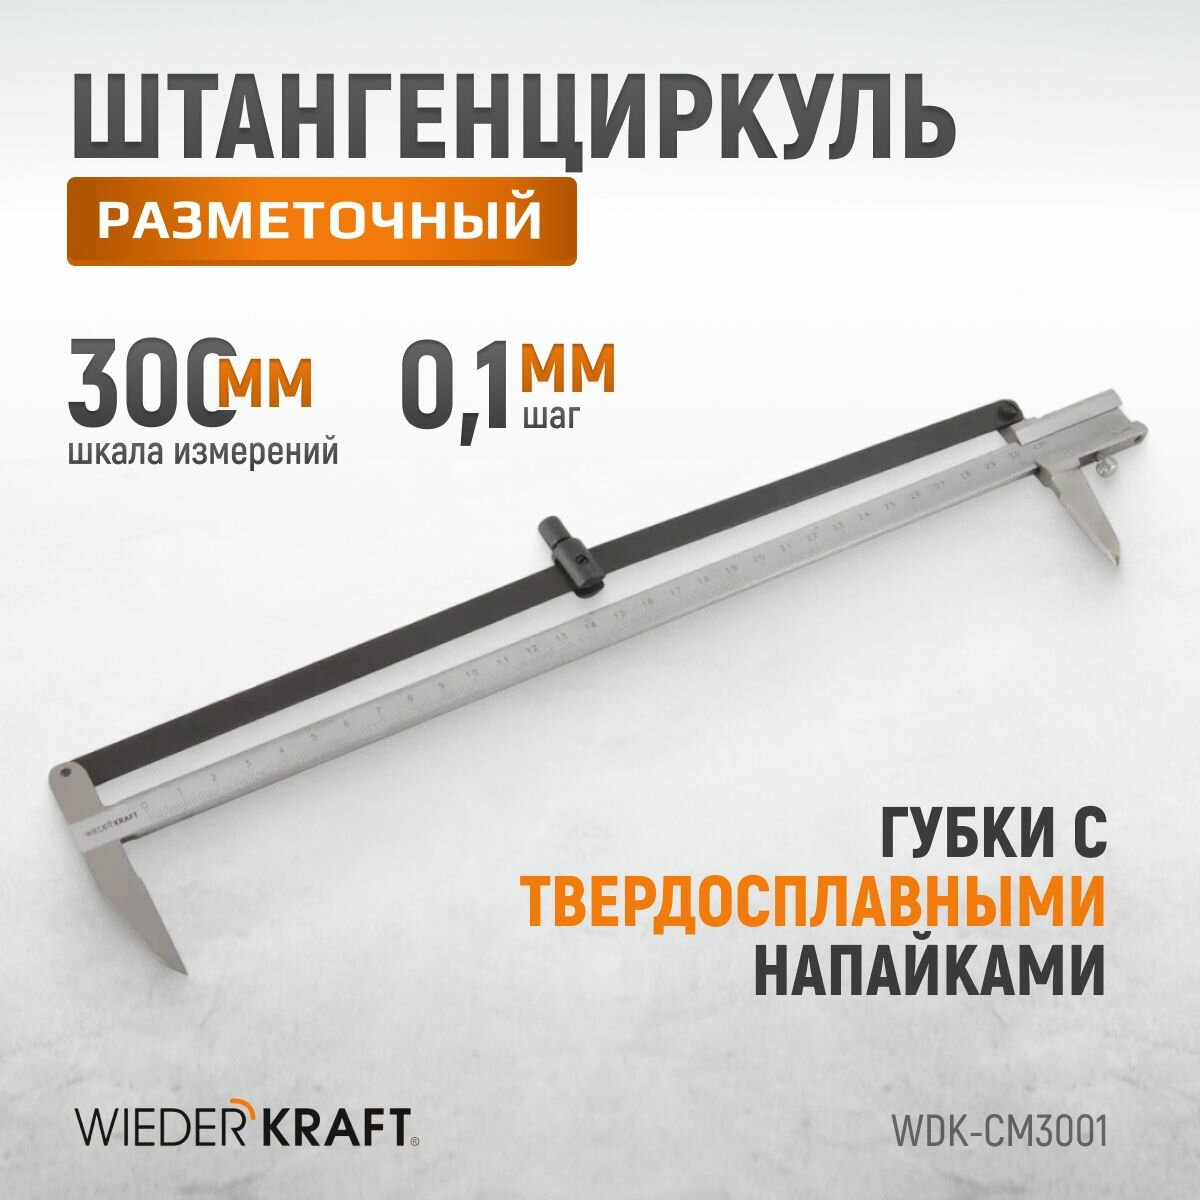 Штангенциркуль WIEDERKRAFT разметочный 300 мм 01 мм WDK-CM3001